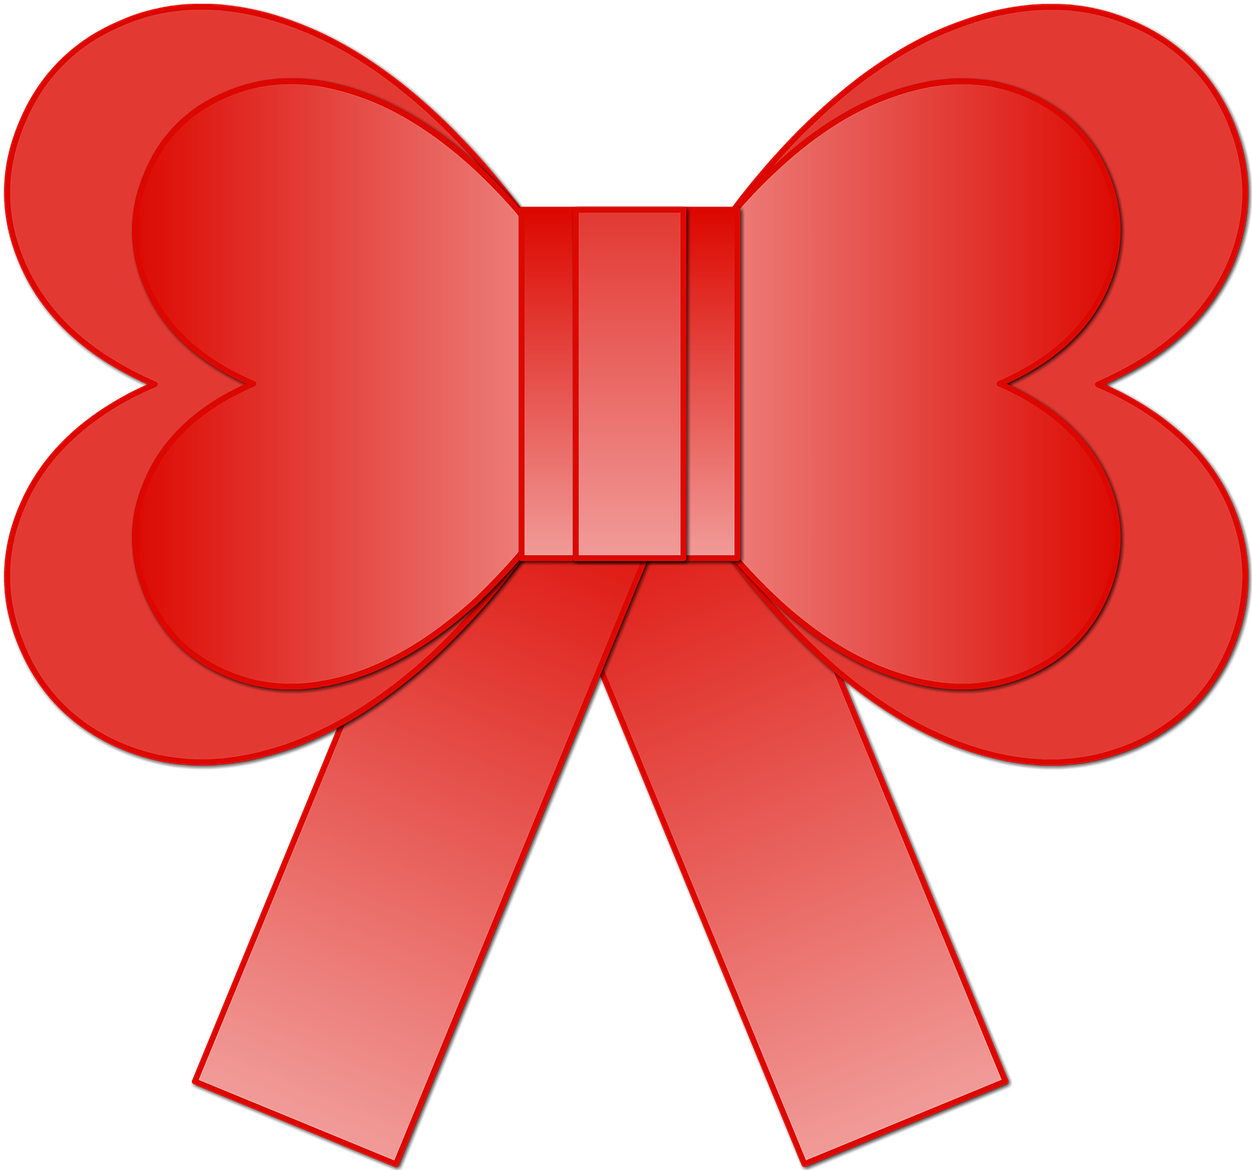 Lace, Red, Present, Red Bow, Red Ribbon - รูป โบว์ สี แดง (1280x1201)